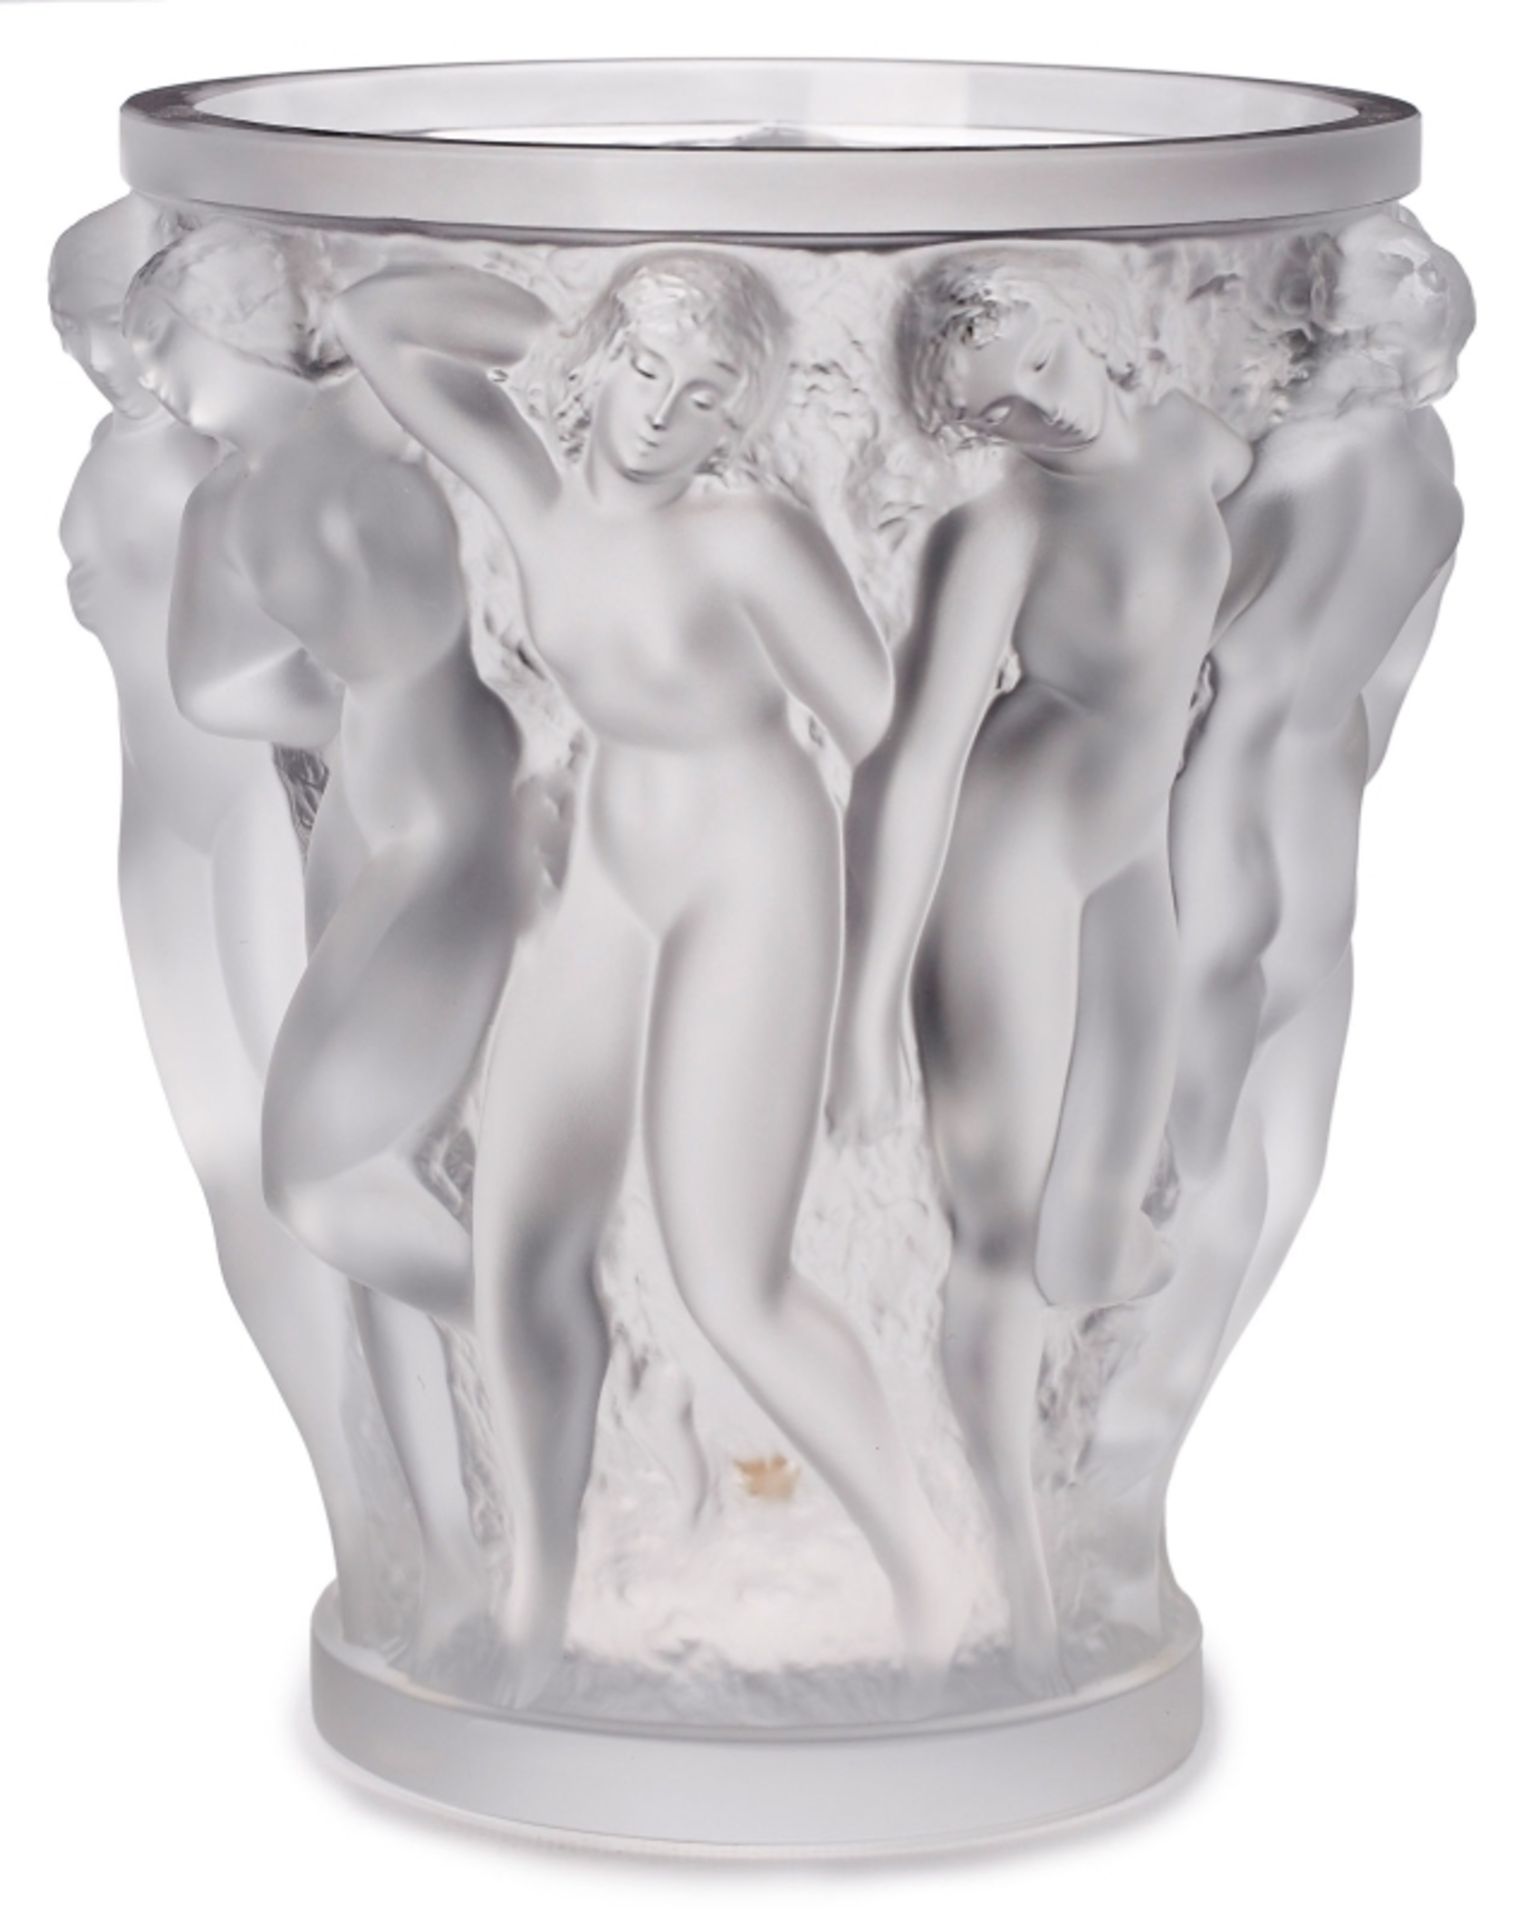 Gr. Vase "Bacchantes Grand", Lalique Ende 20. Jh.